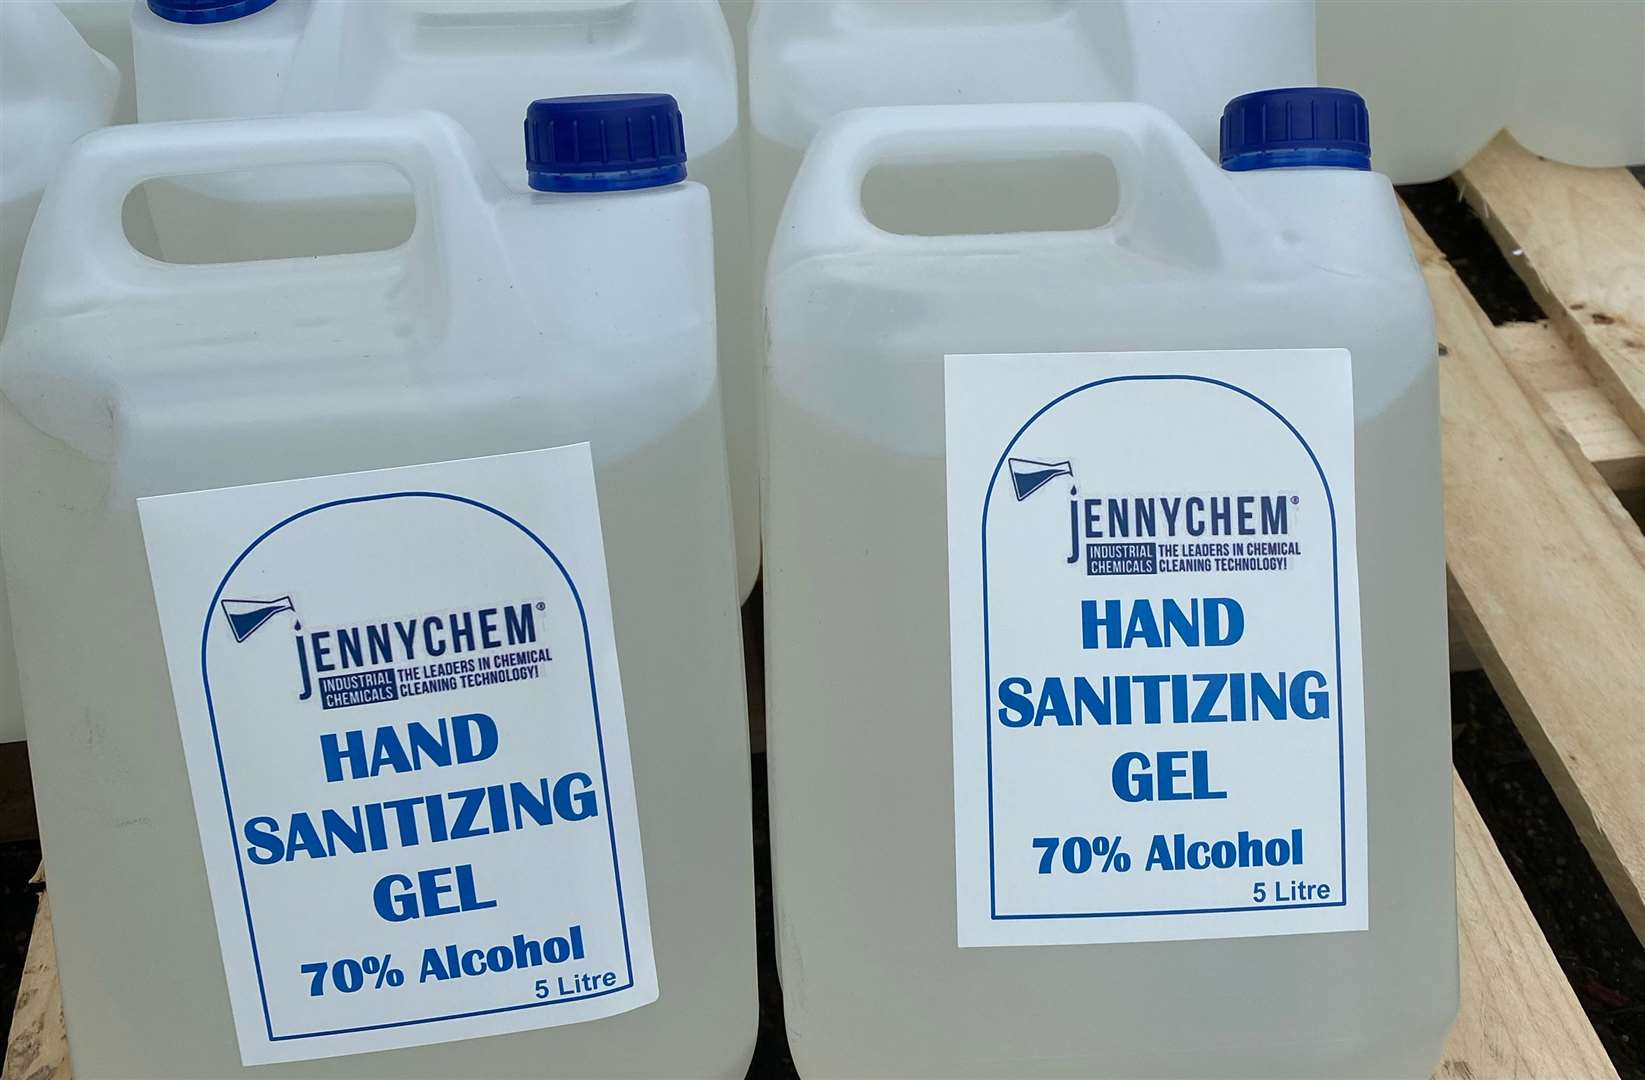 Jennychem produce industrial chemicals including hand sanitiser